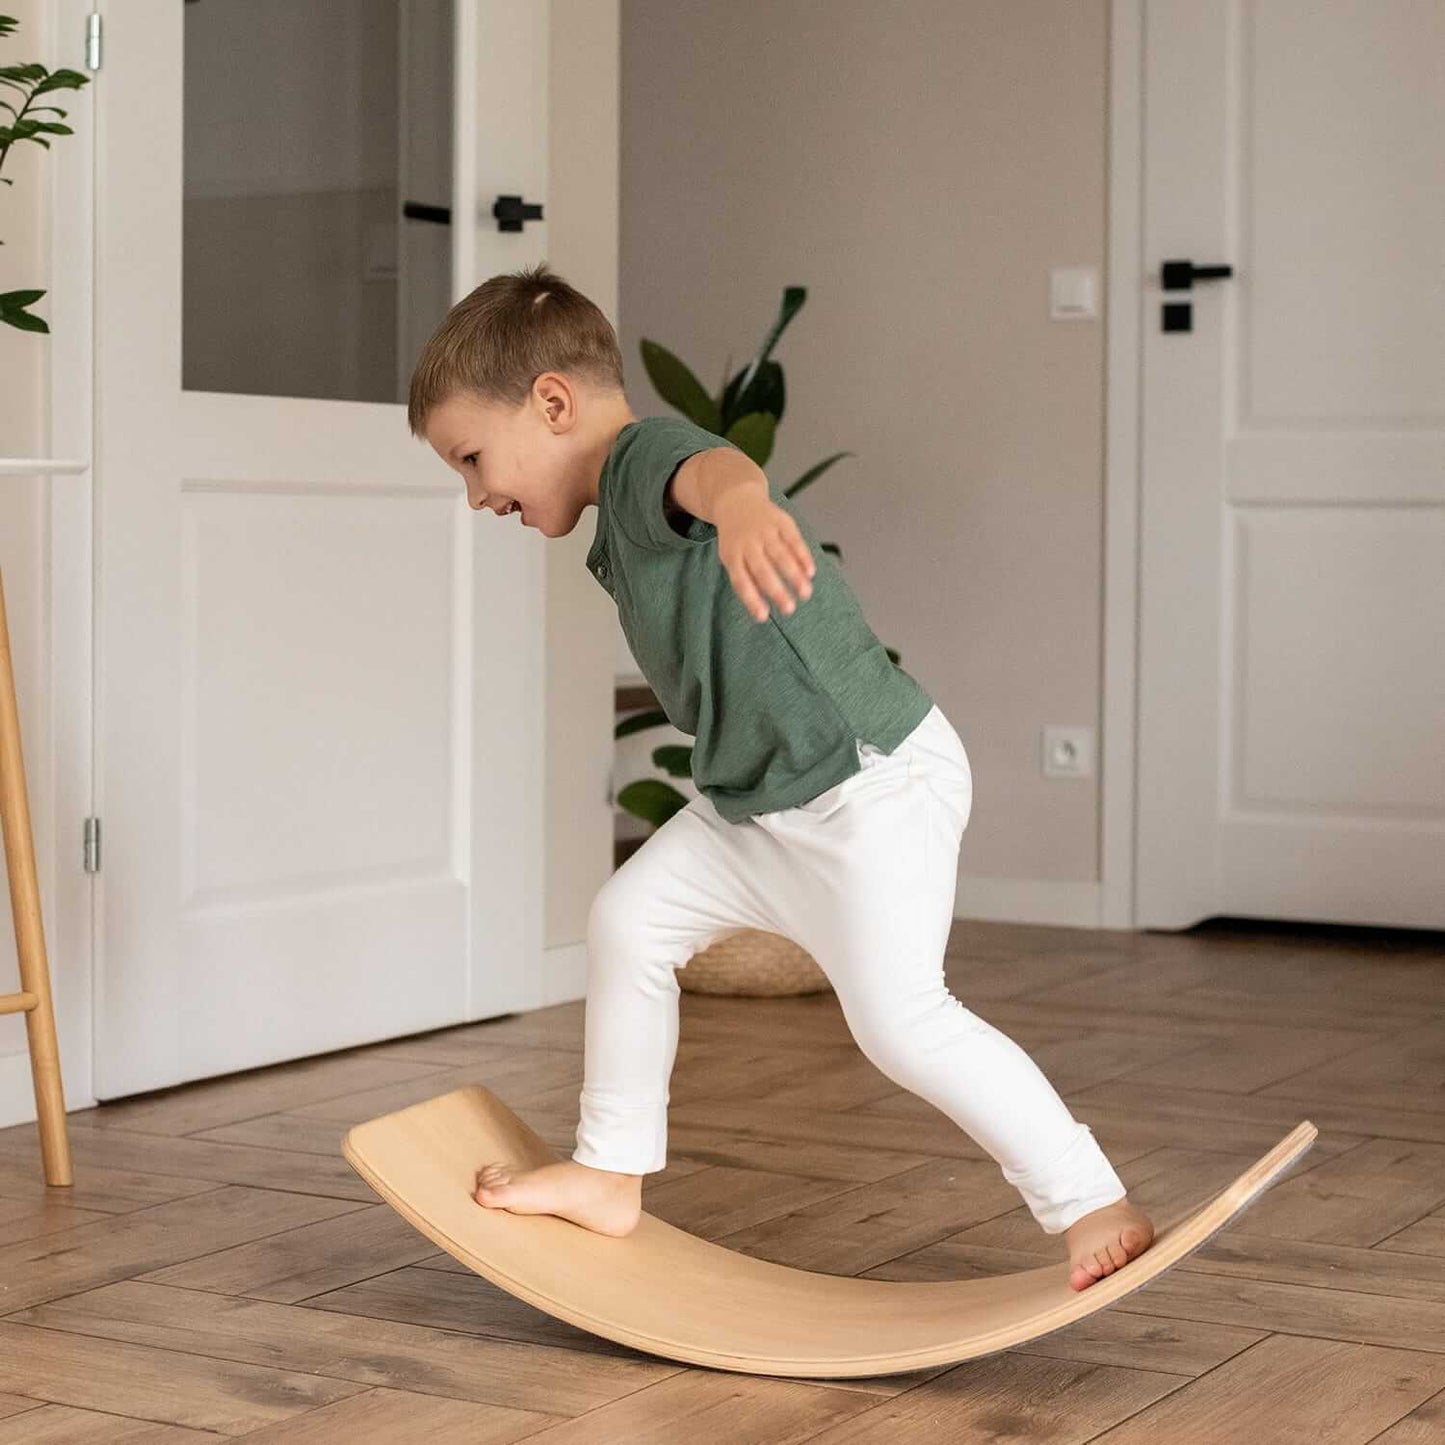 MeowBaby® Balance Board Balancierbrett aus Holz mit Filz